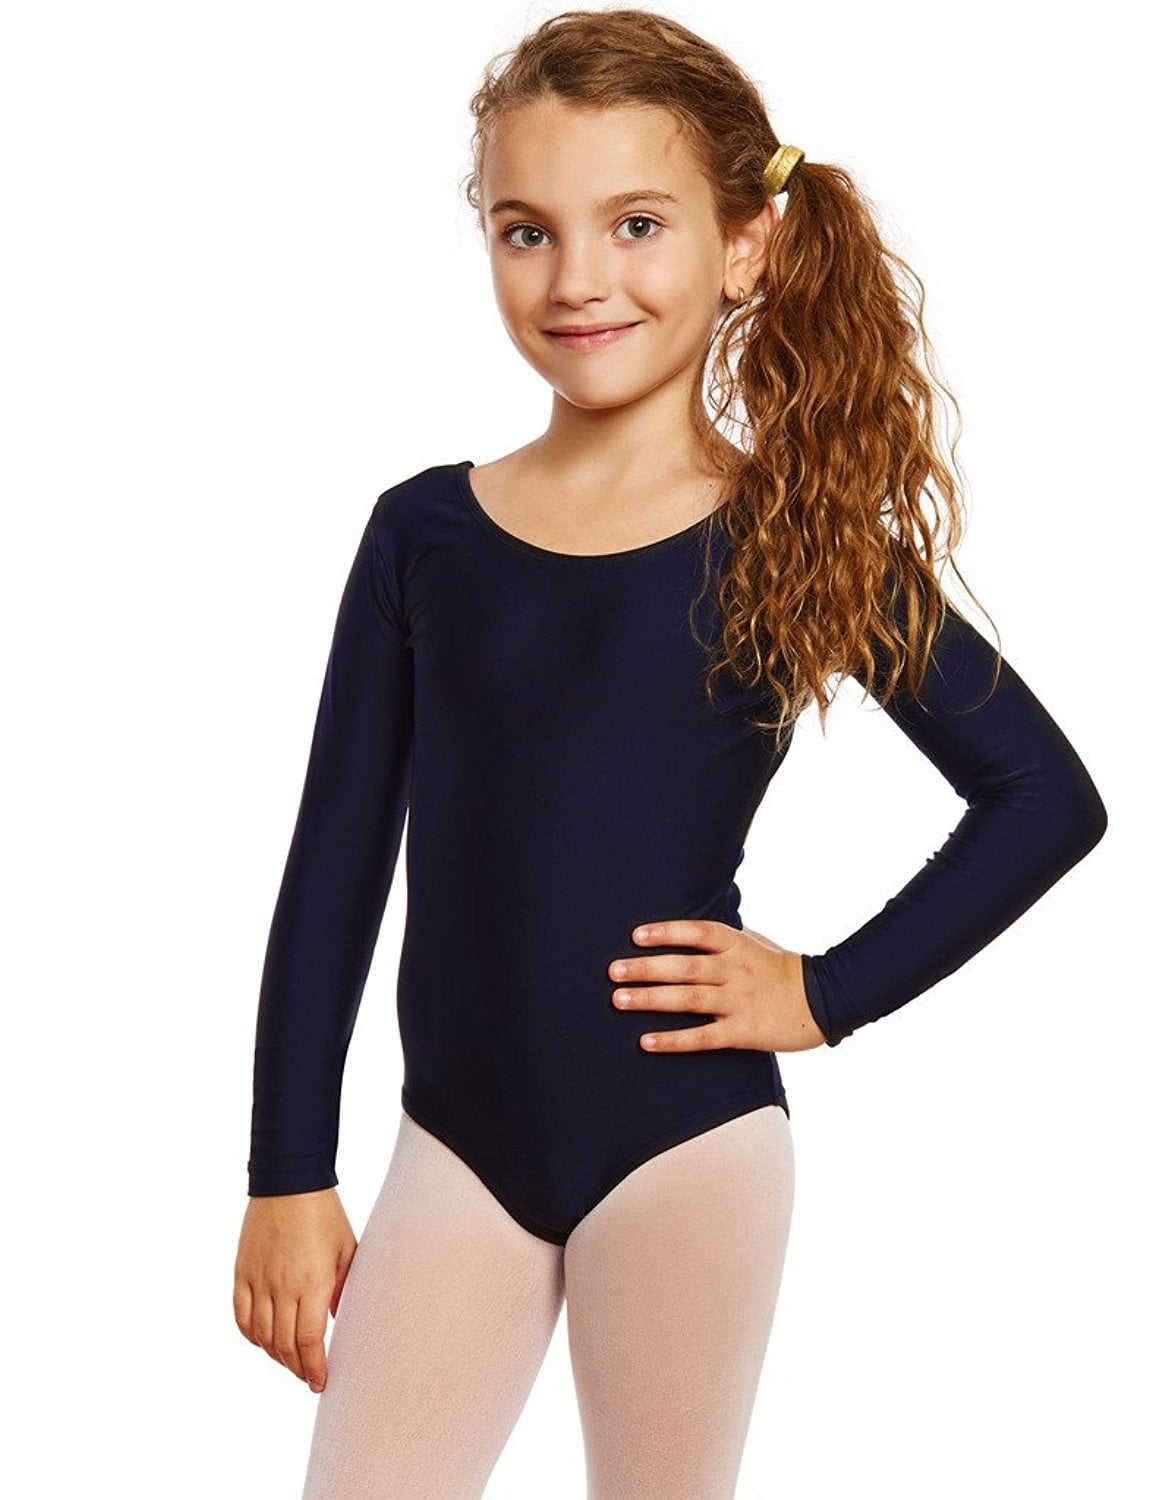 AGE 2-5 Long Sleeved Leotard NAVY BLUE Girls Dance Nylon Lycra Gymnastics Ballet